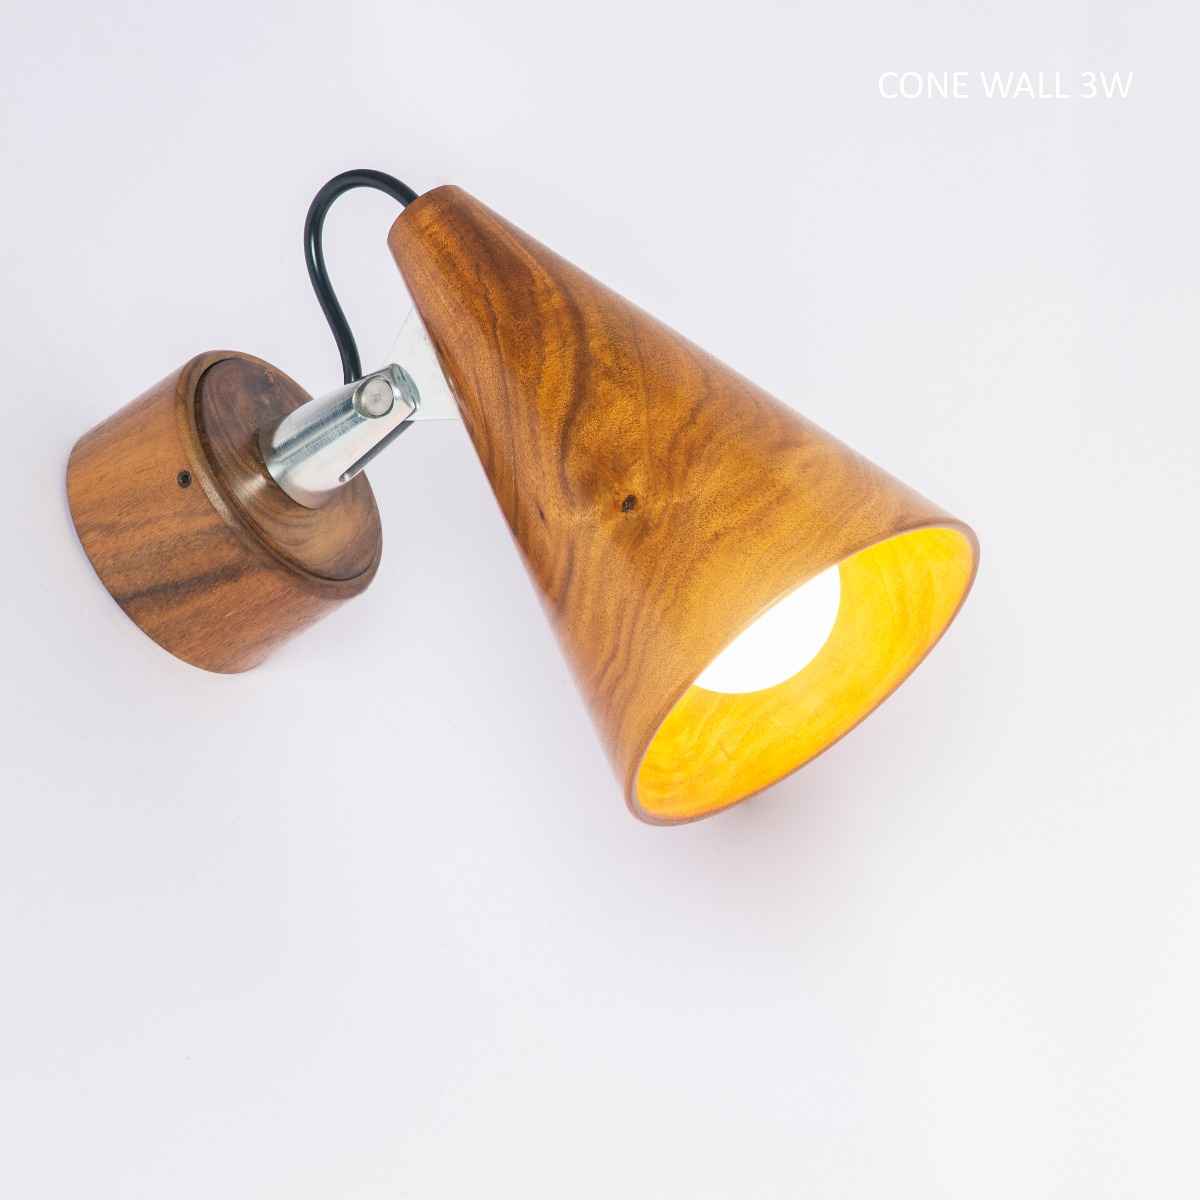 Cone Wall 3W Lamp